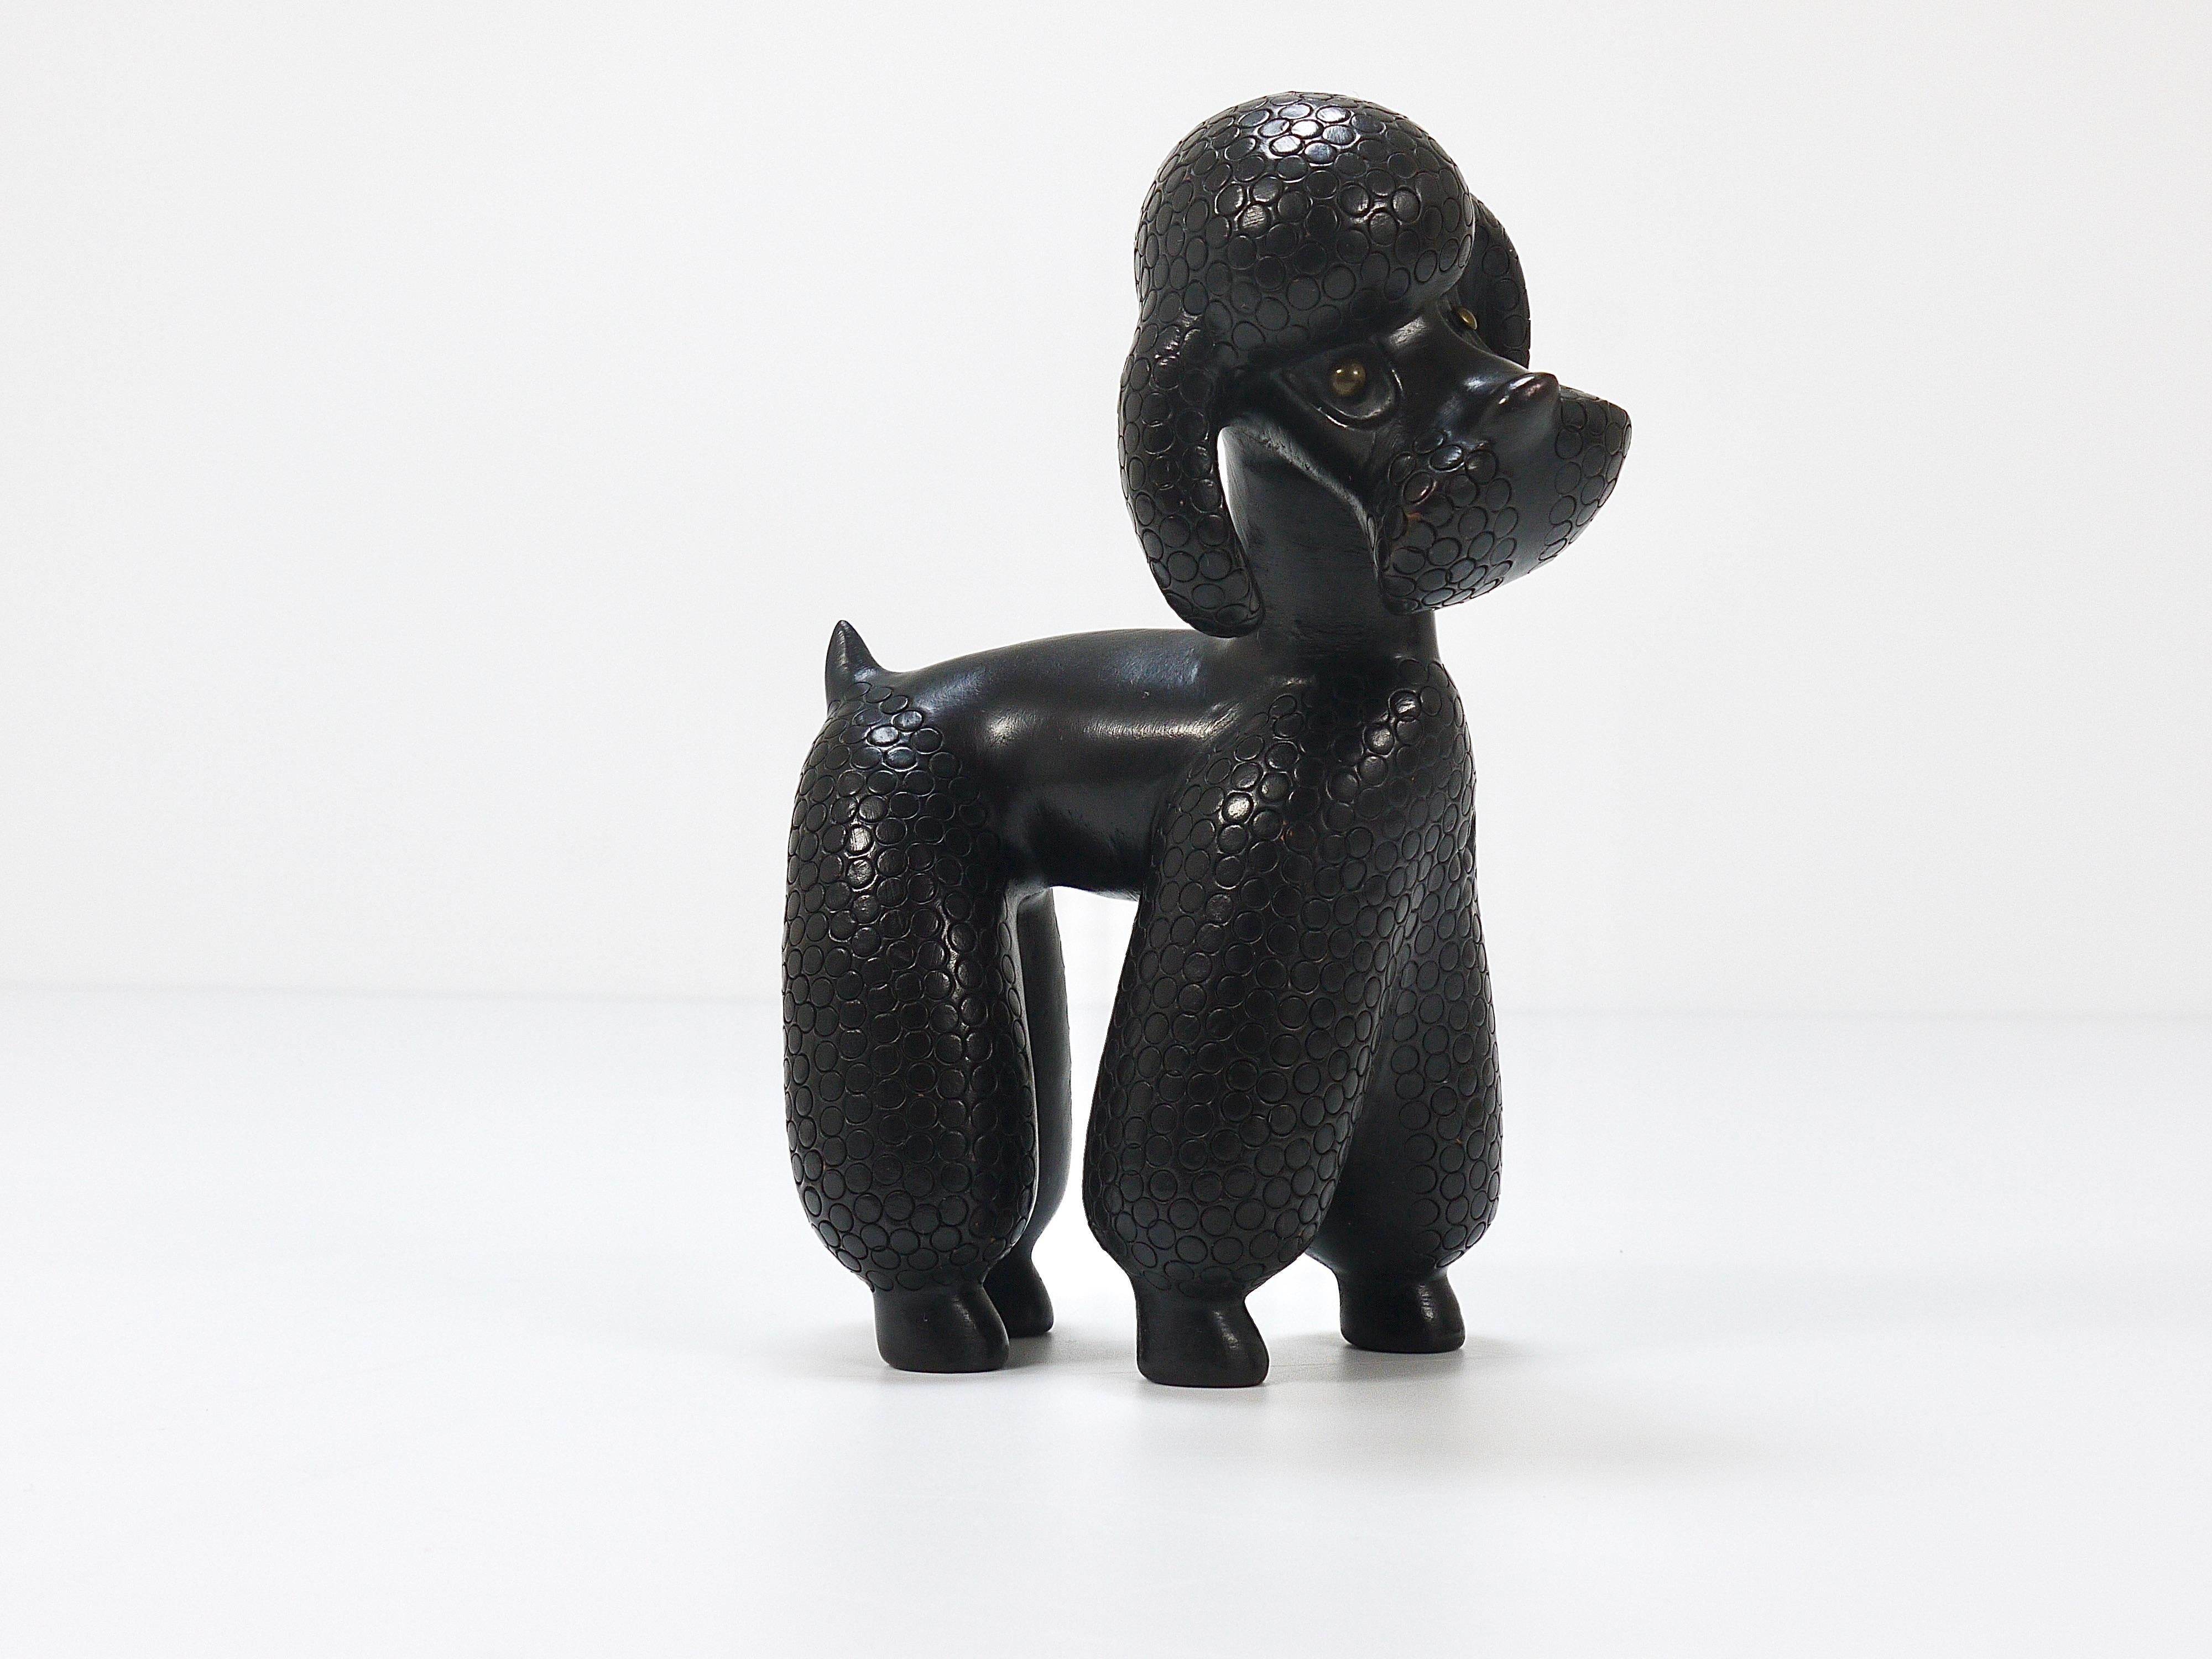 Glazed Charming Dog Poodle Sculpture Figurine by Leopold Anzengruber, Austria, 1950s